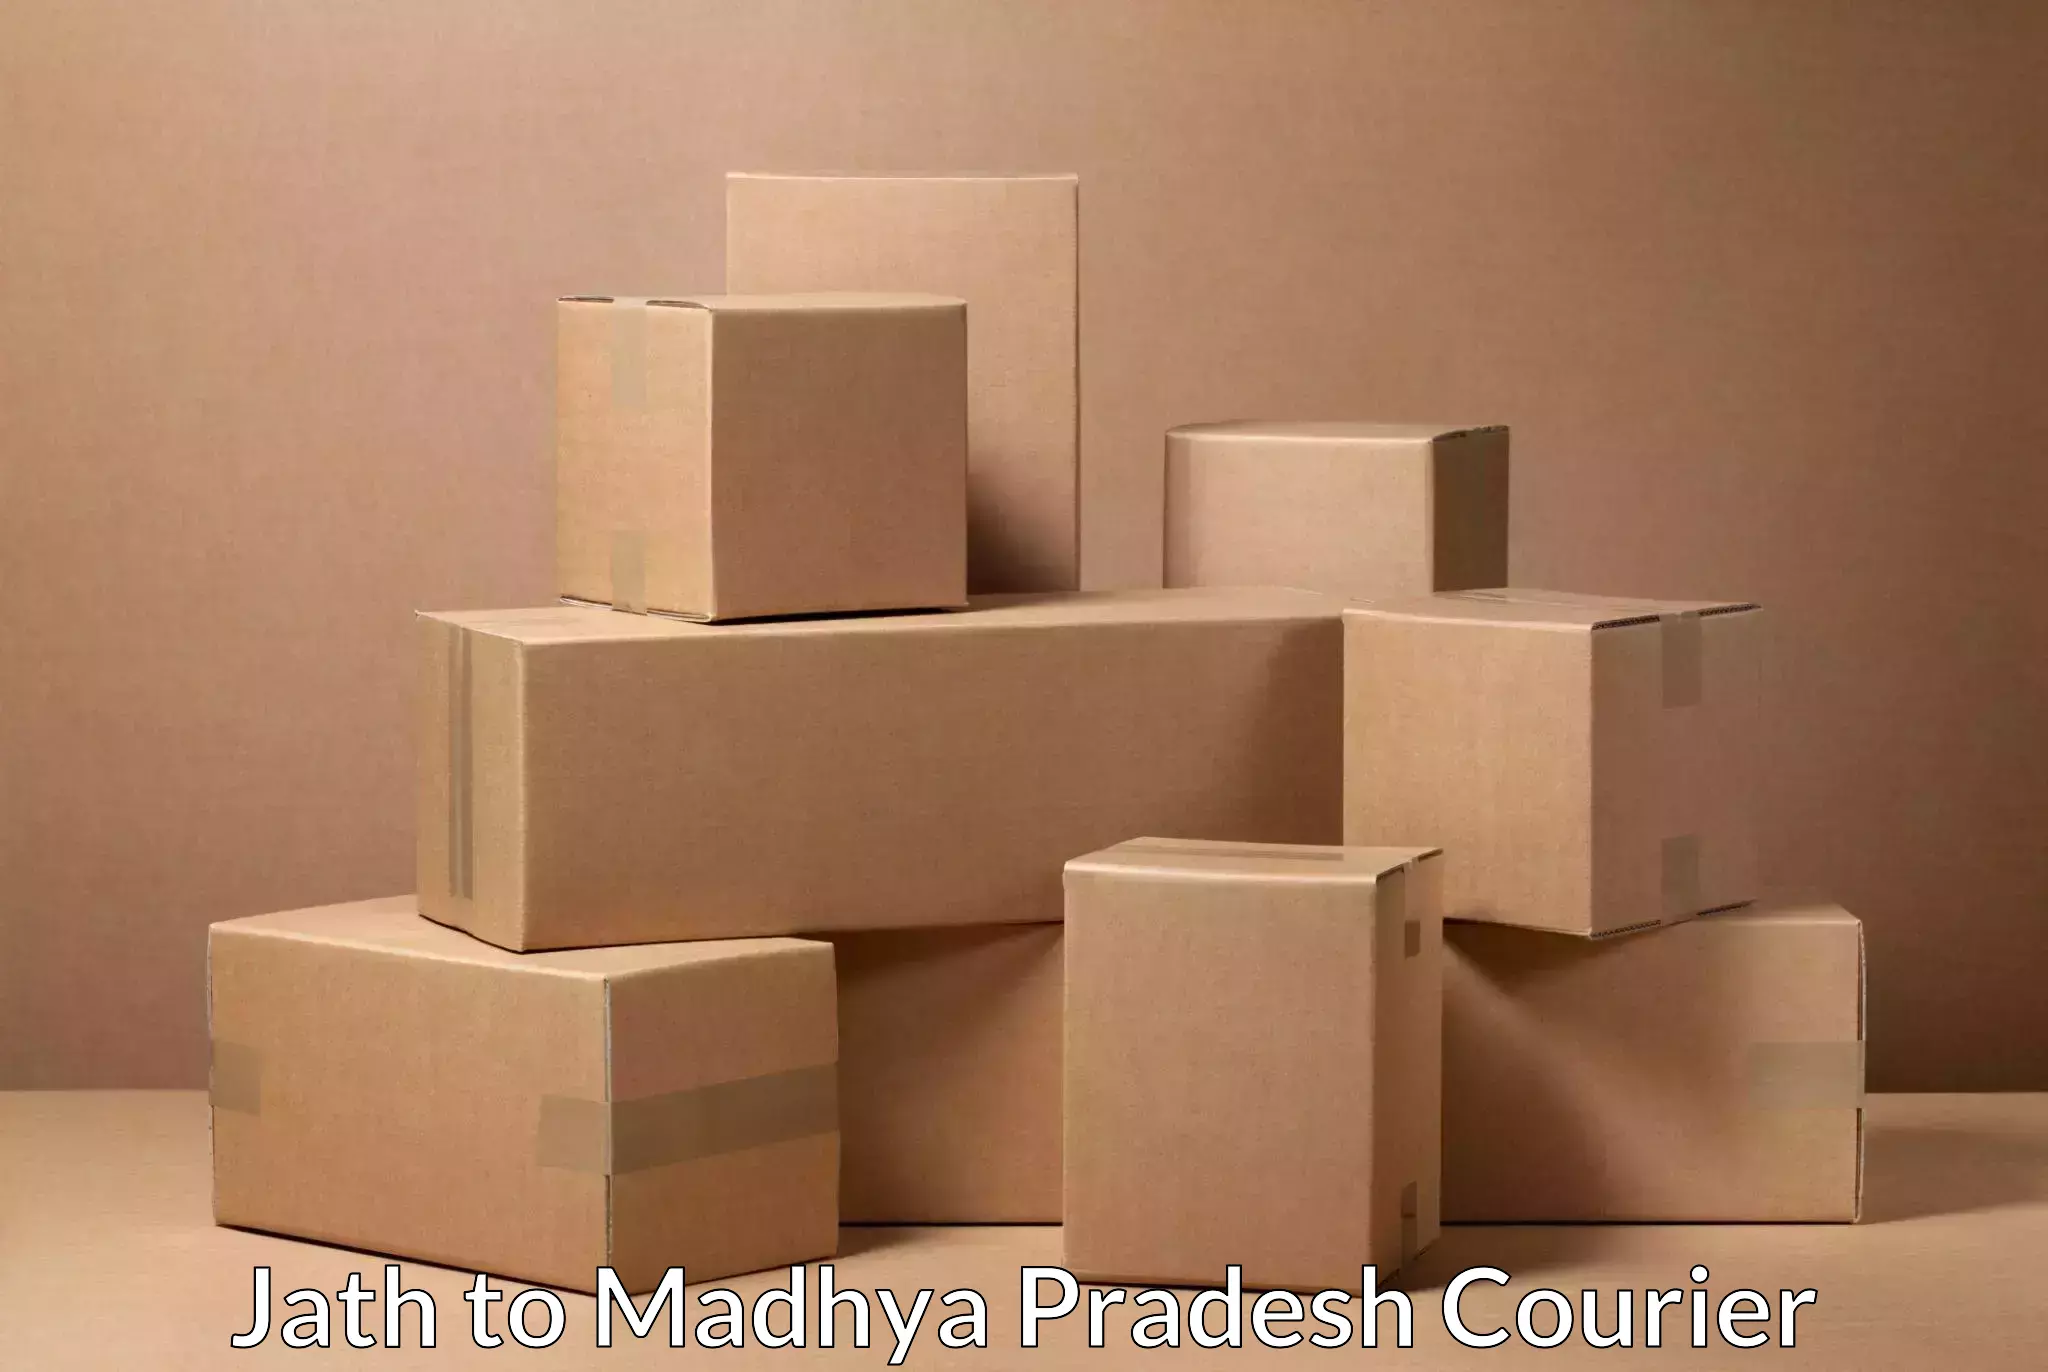 International courier networks Jath to Madhya Pradesh